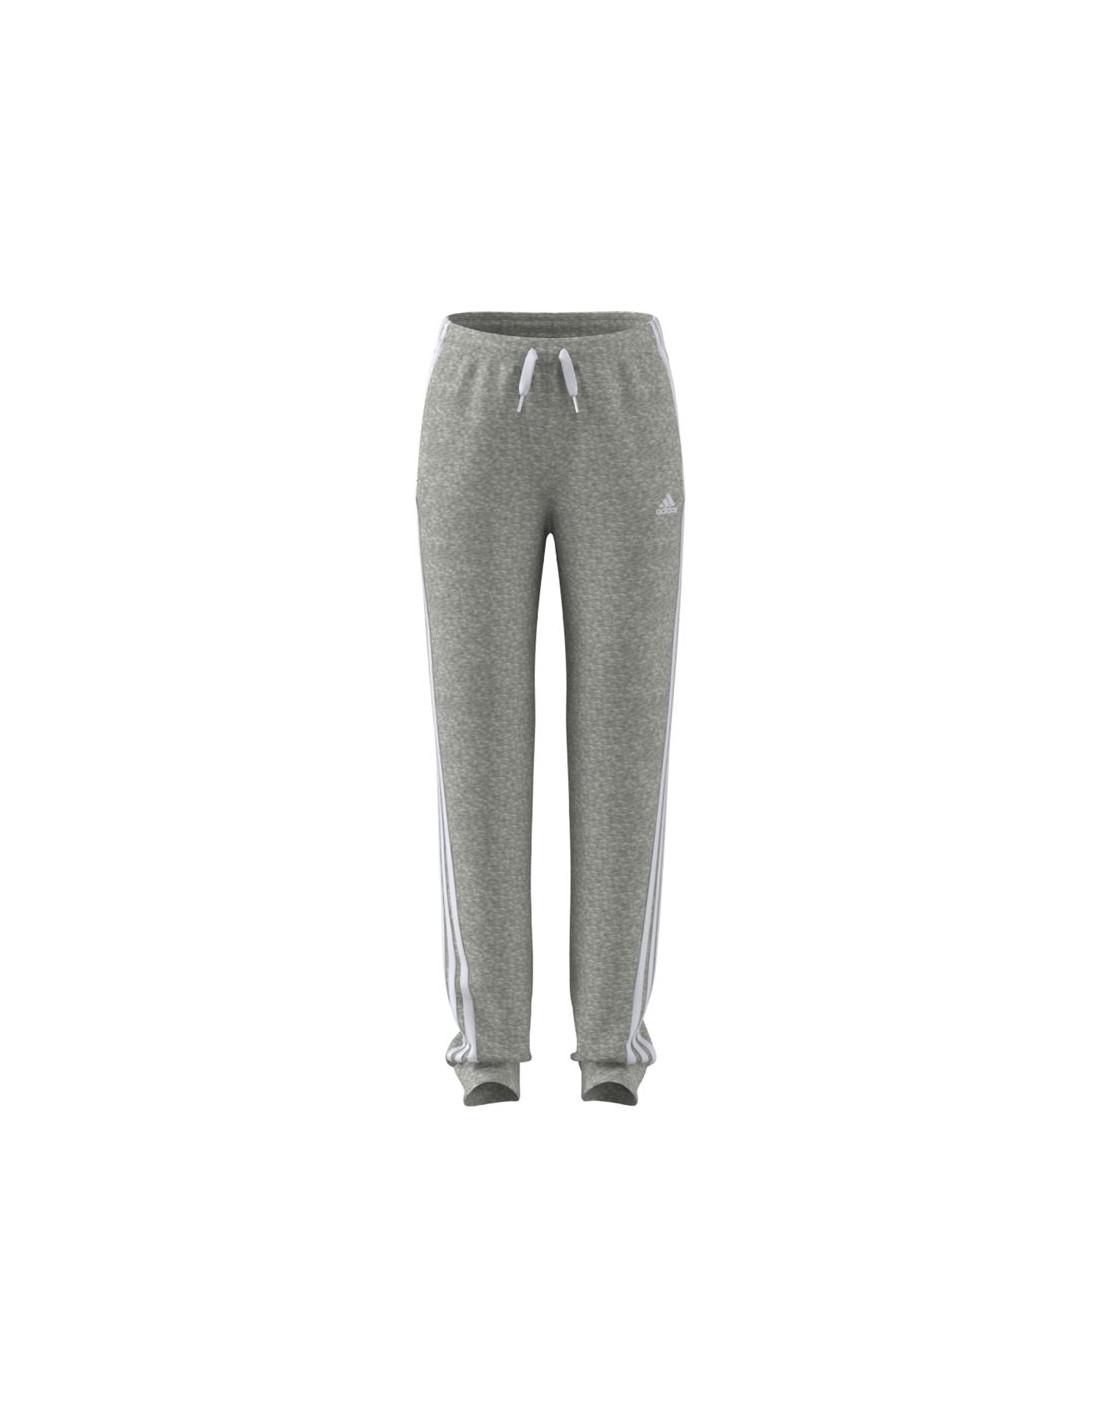 Pantalones adidas essentials 3-stripes niña grey